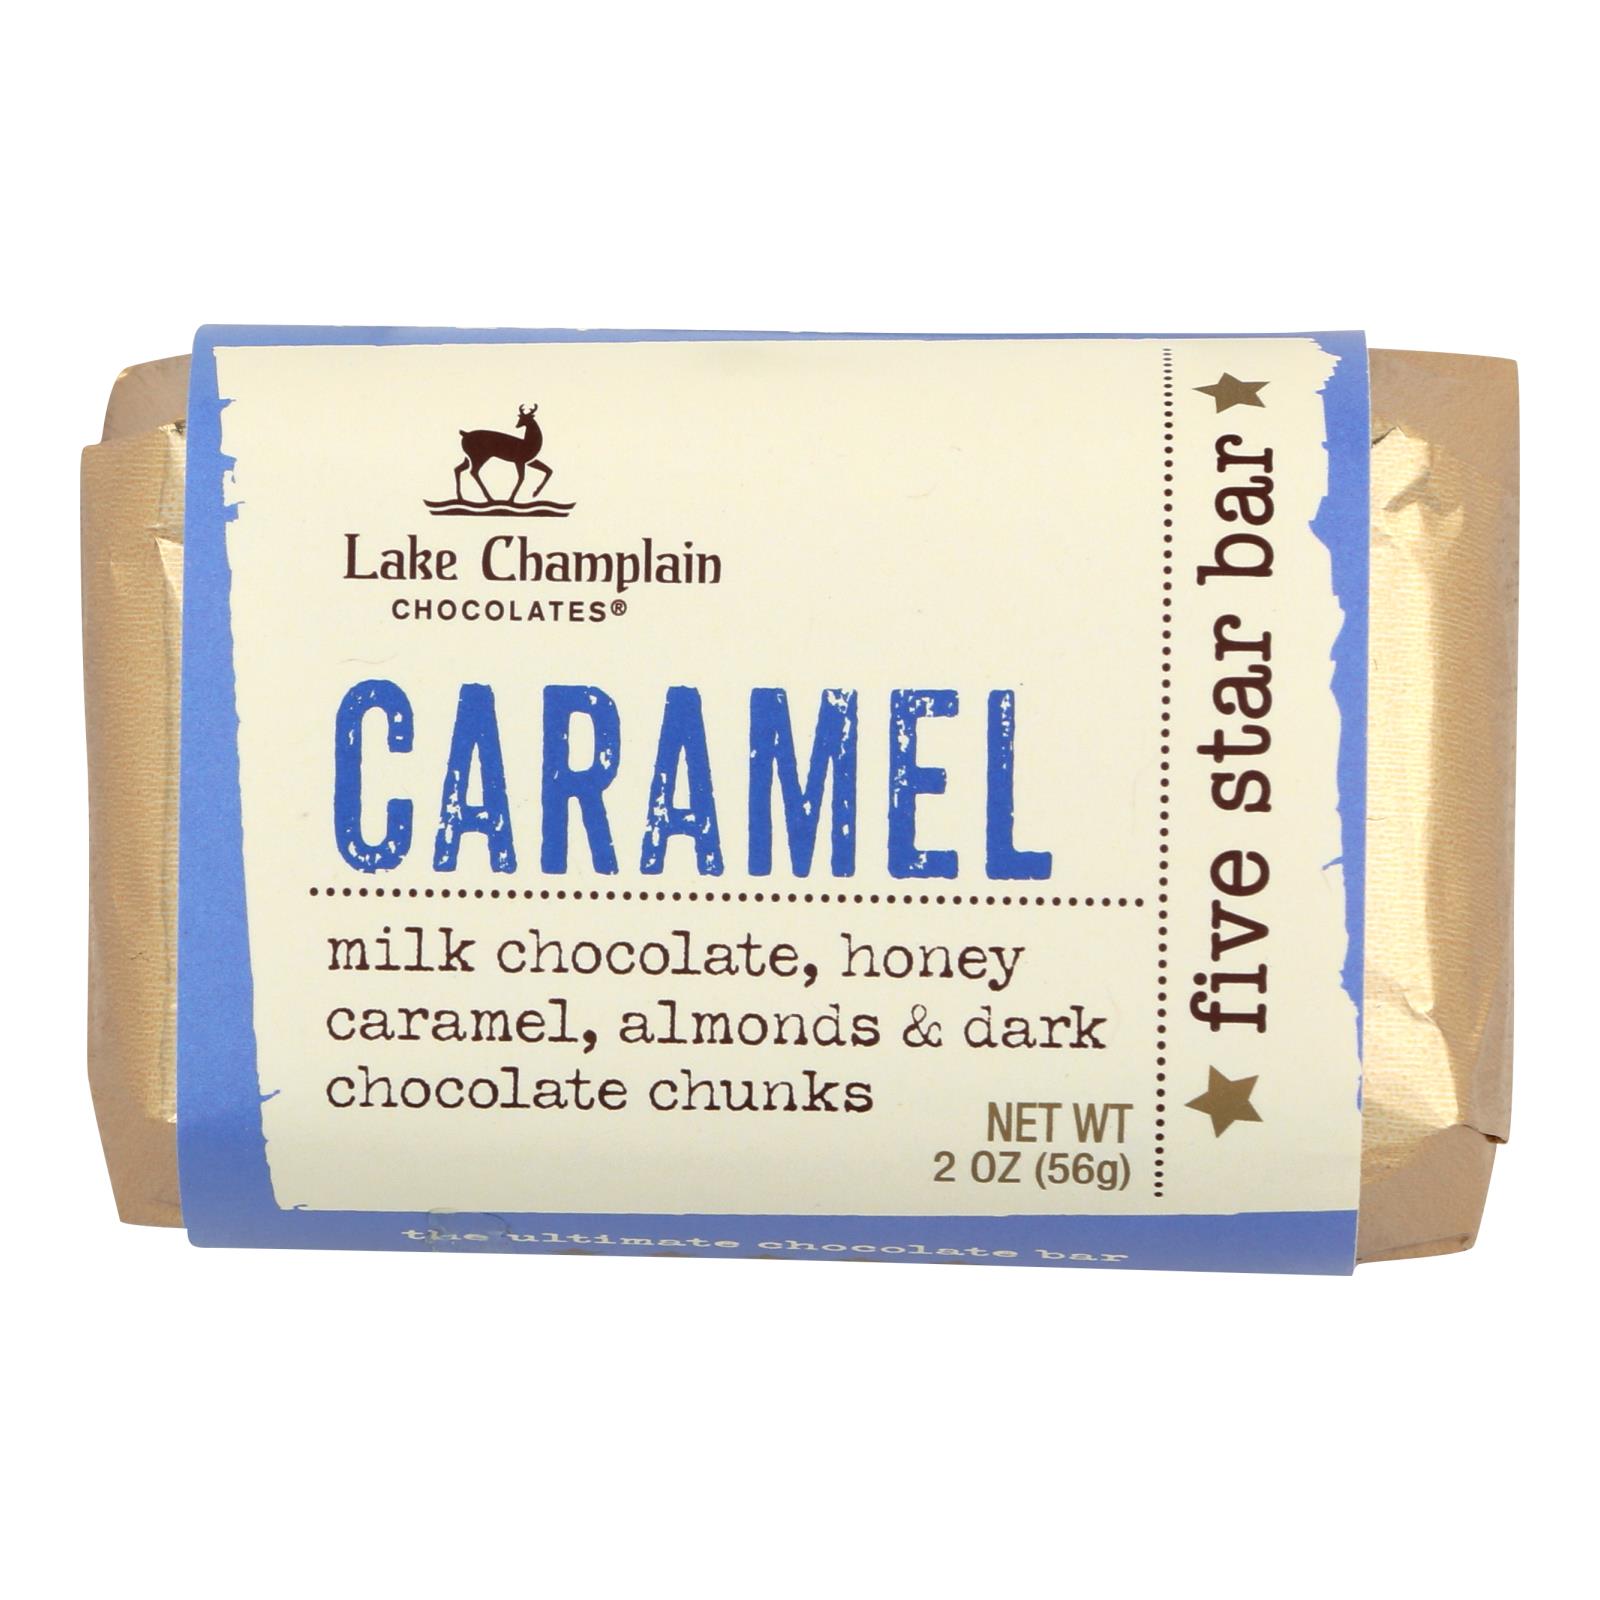 Lake Champlain Chocolates Caramel Five Star Bar - 16개 묶음상품 - 2 OZ